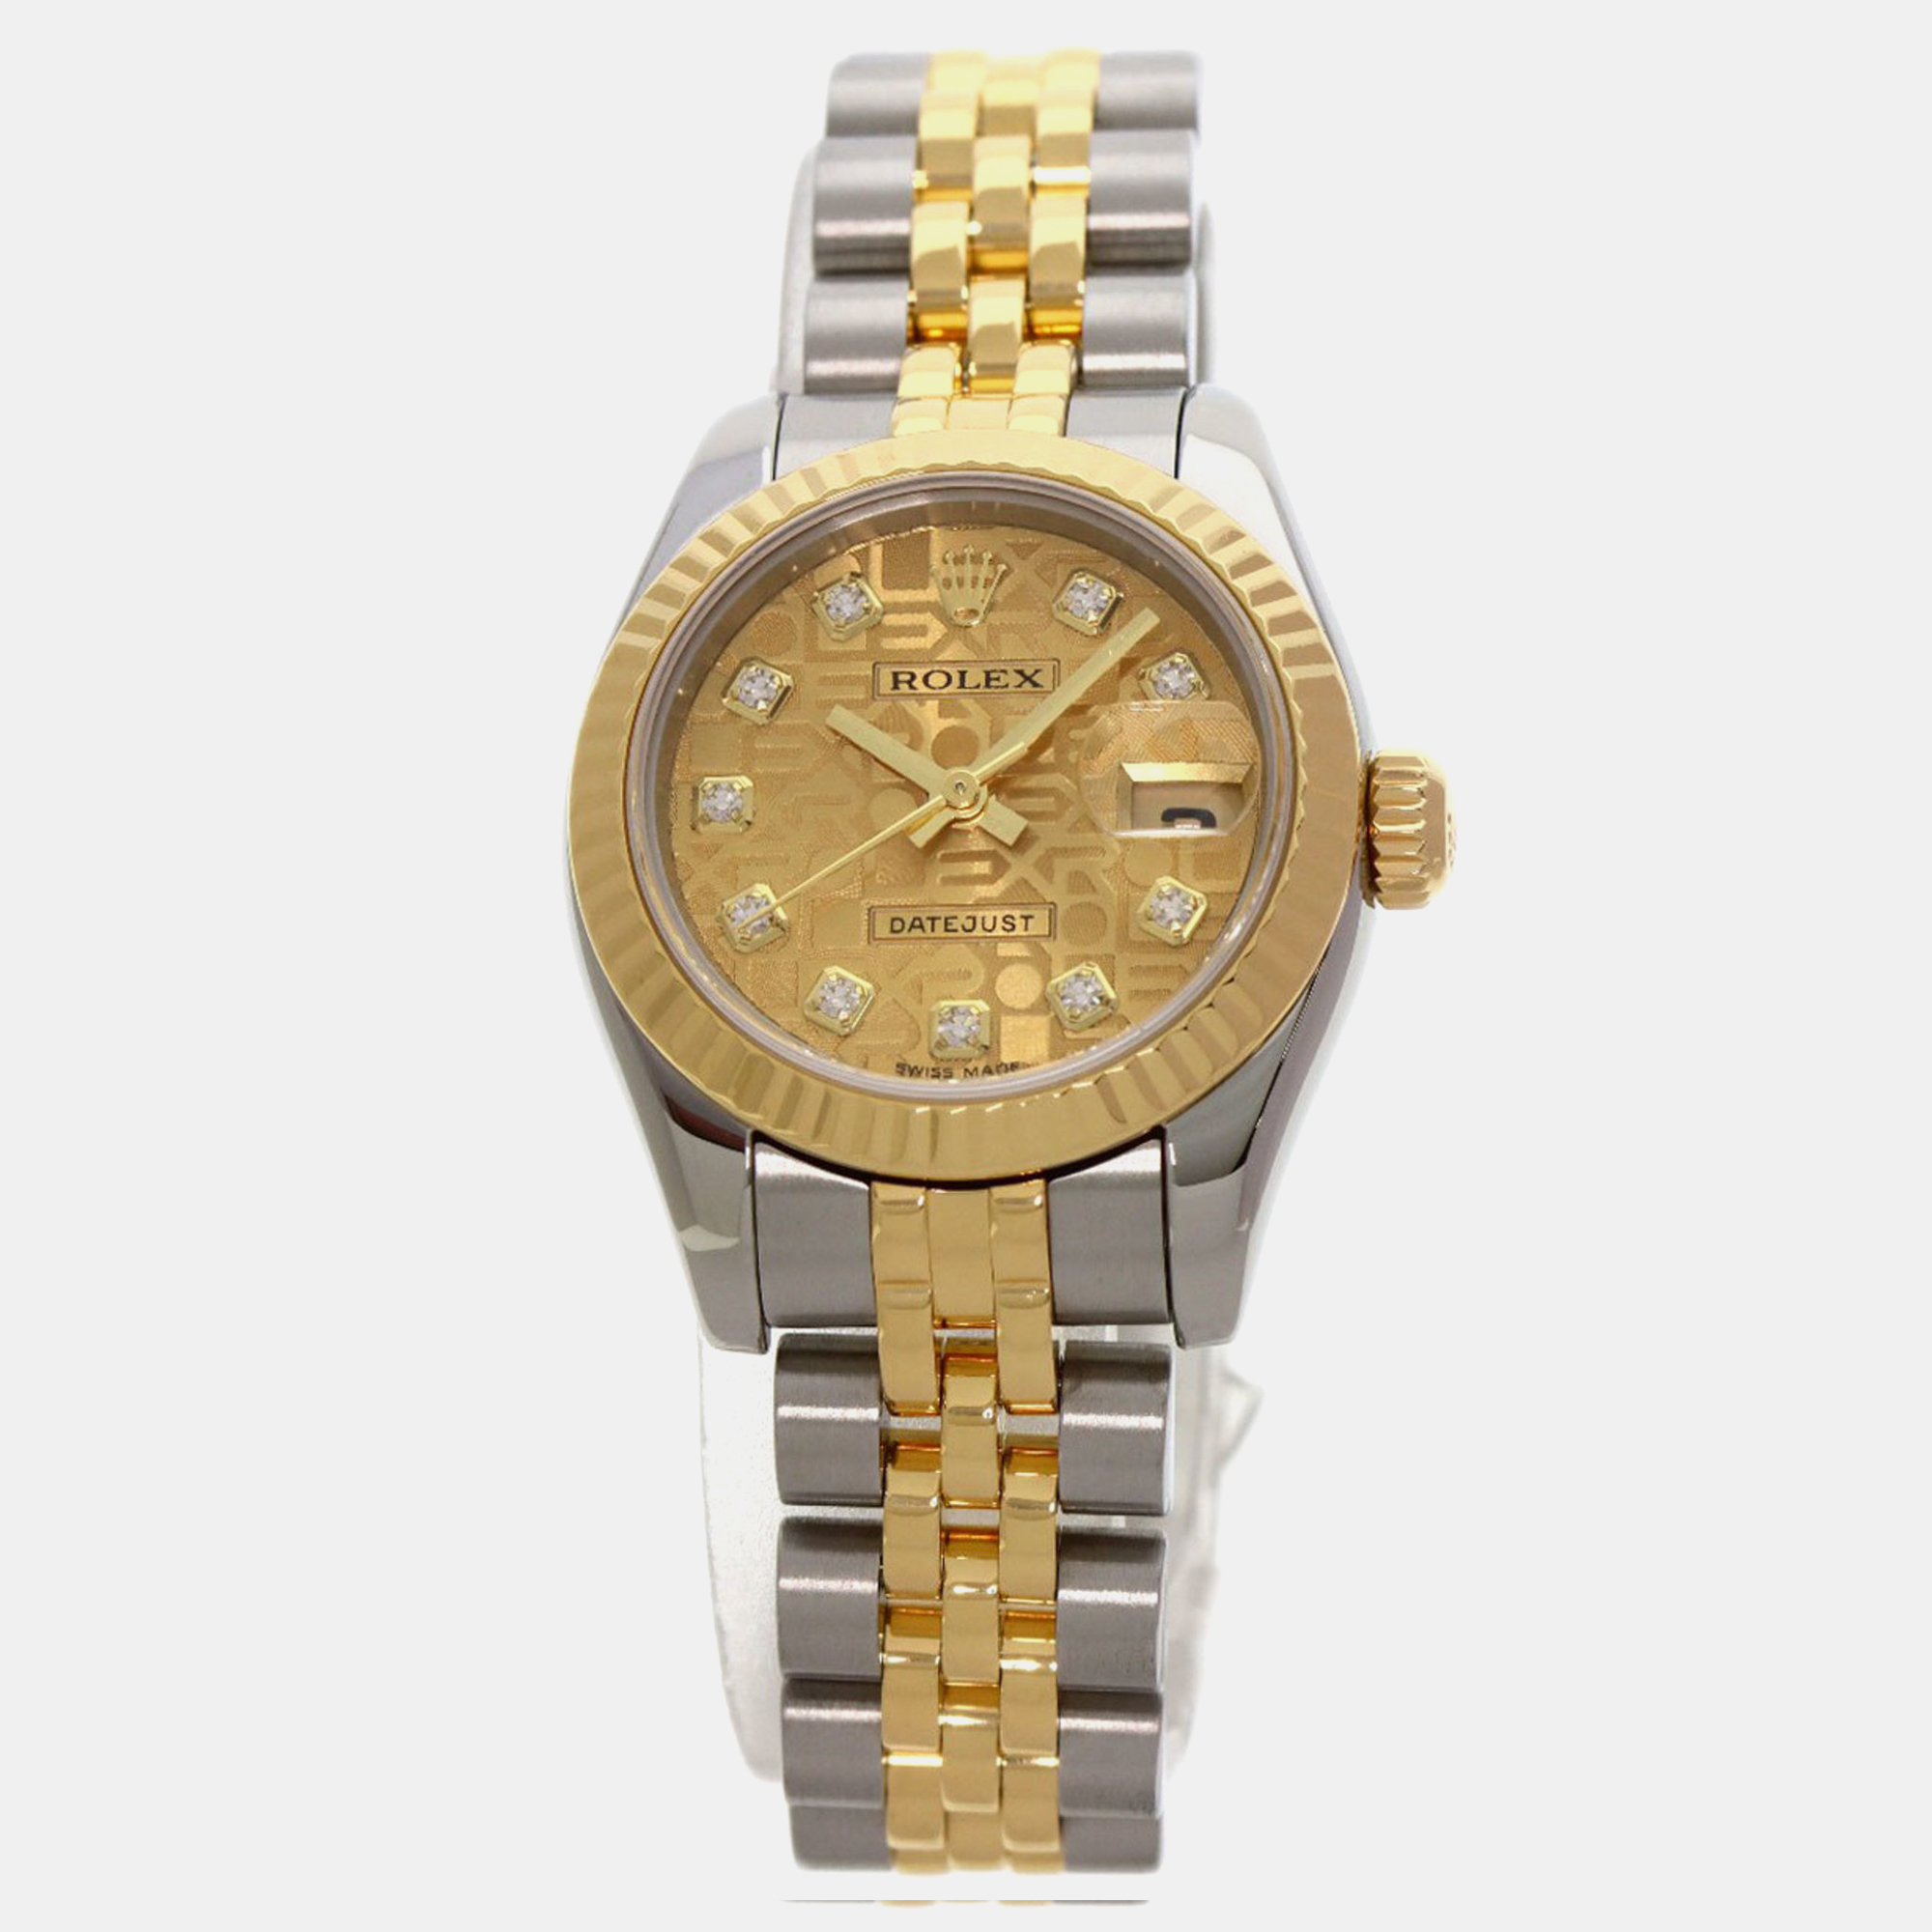 Rolex champagne 18k yellow gold stainless steel diamond datejust 179173 automatic women's wristwatch 33 mm